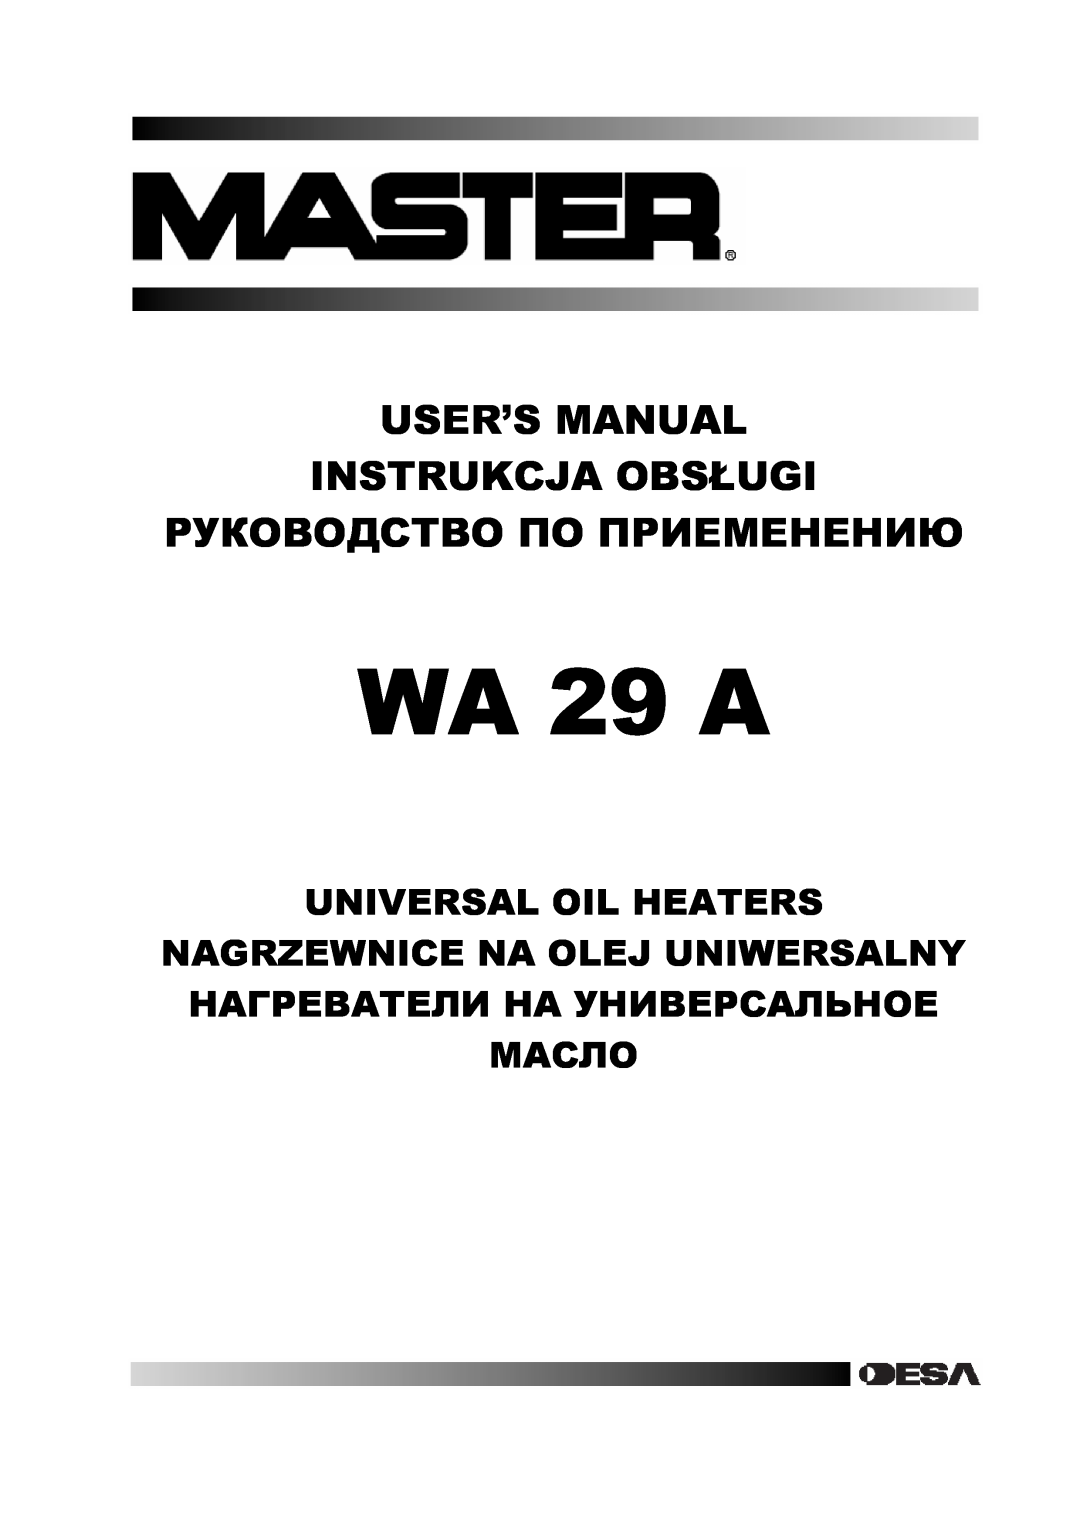 Master Lock WA 29 A user manual Руководство По Приеменению, Universal Oil Heaters 